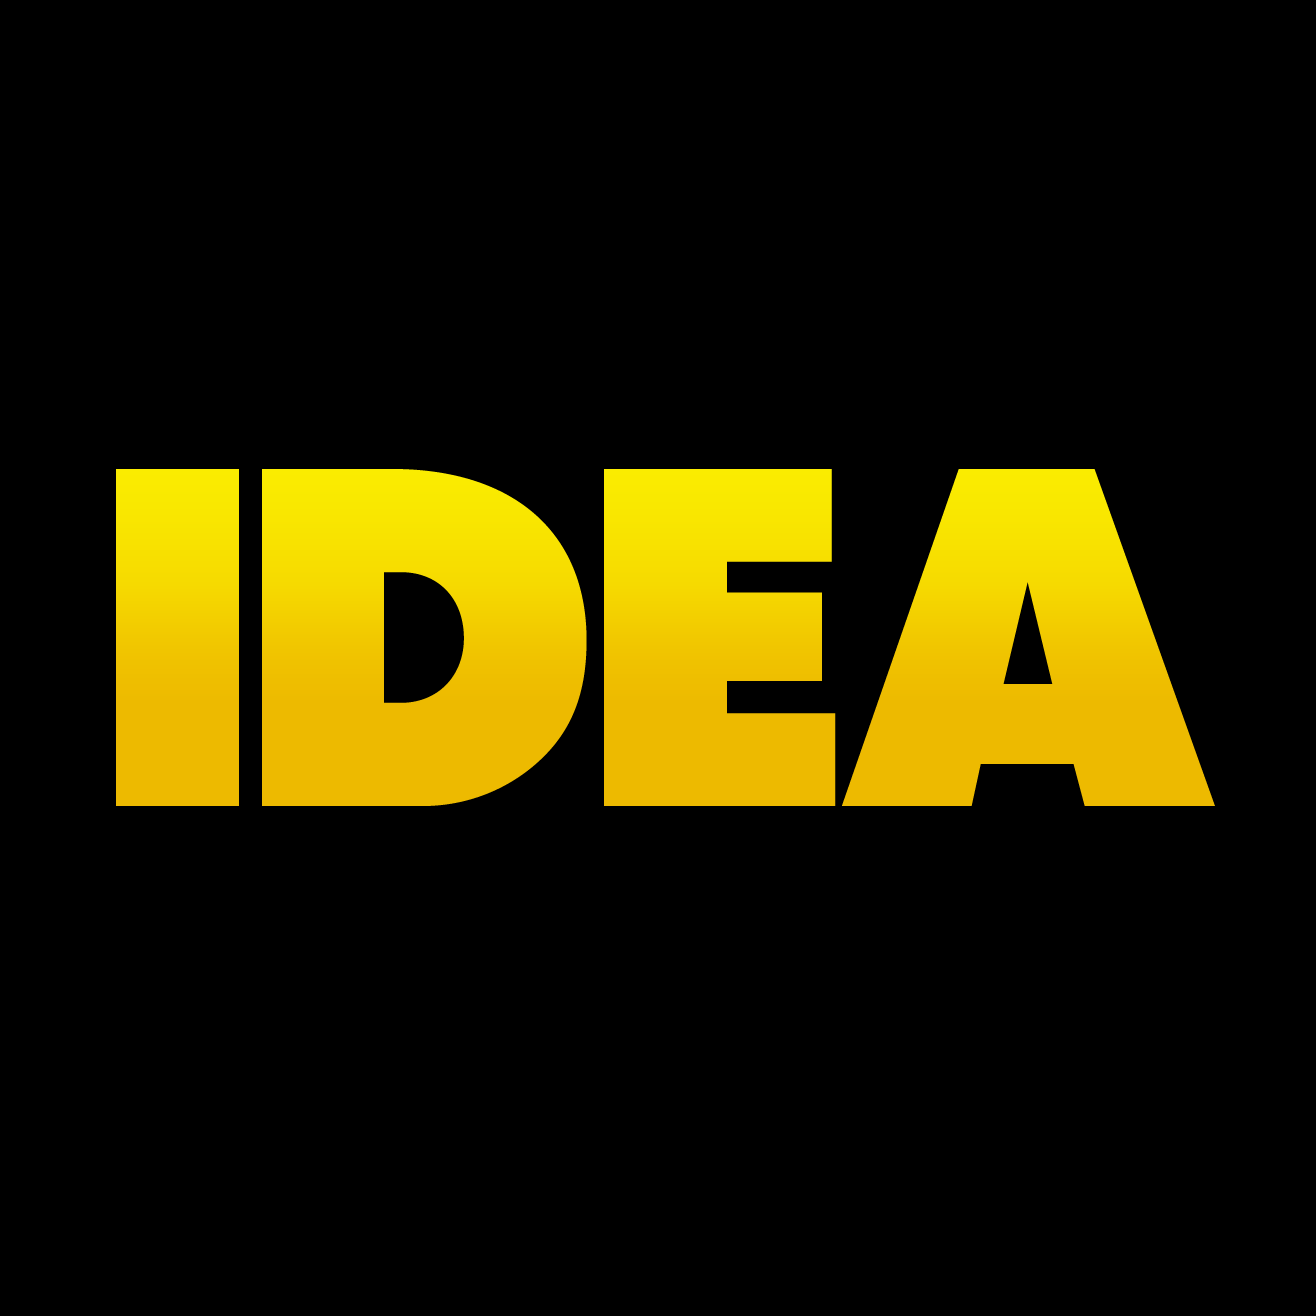 IDEA – International Digital Entertainment Agency